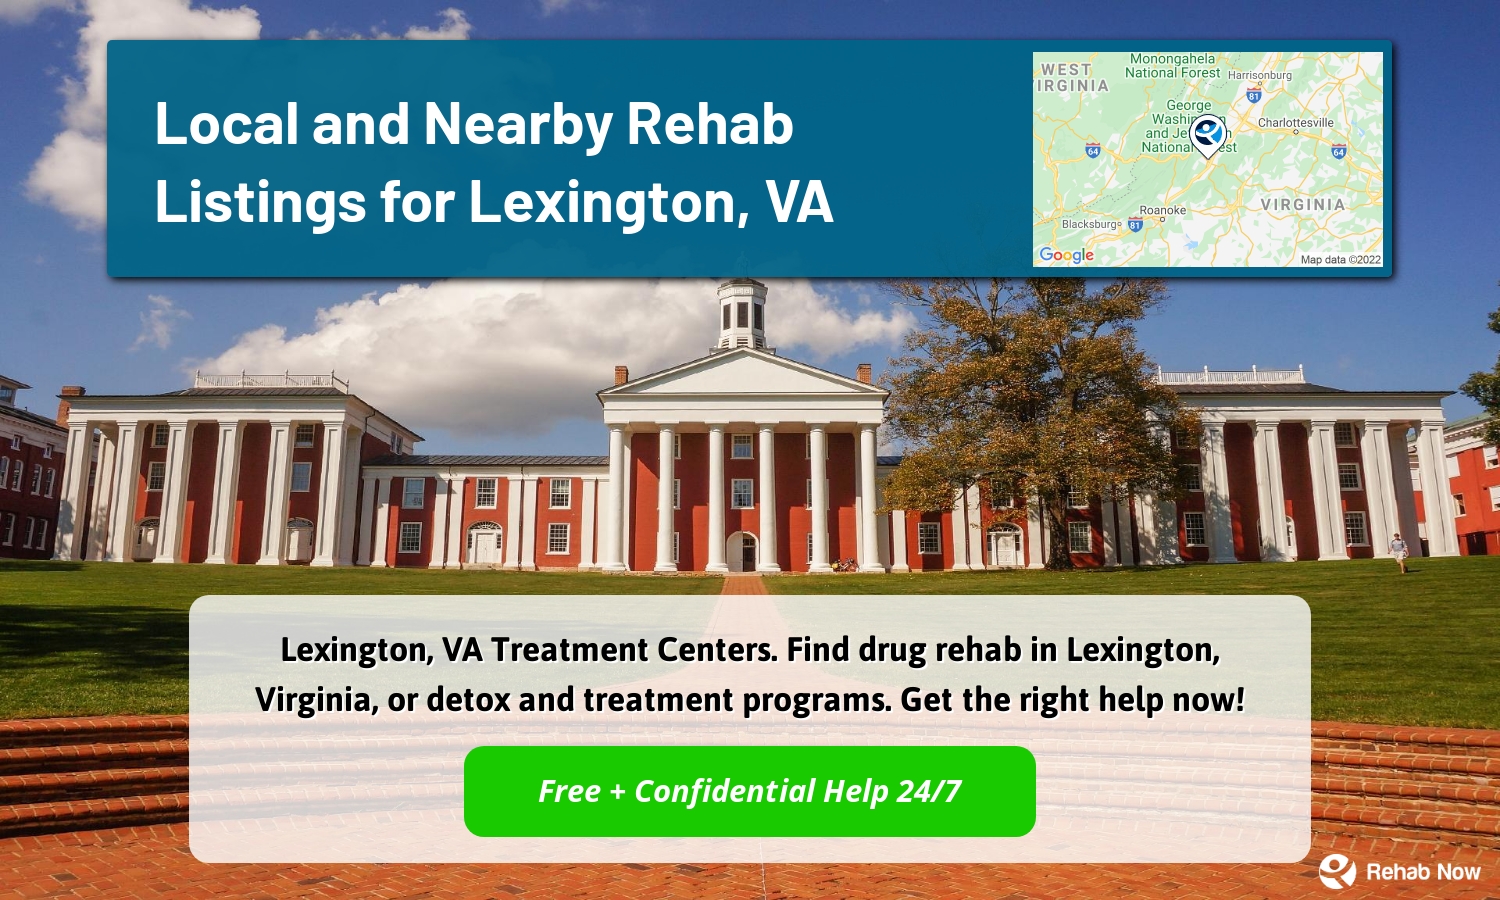 Lexington, VA Treatment Centers. Find drug rehab in Lexington, Virginia, or detox and treatment programs. Get the right help now!